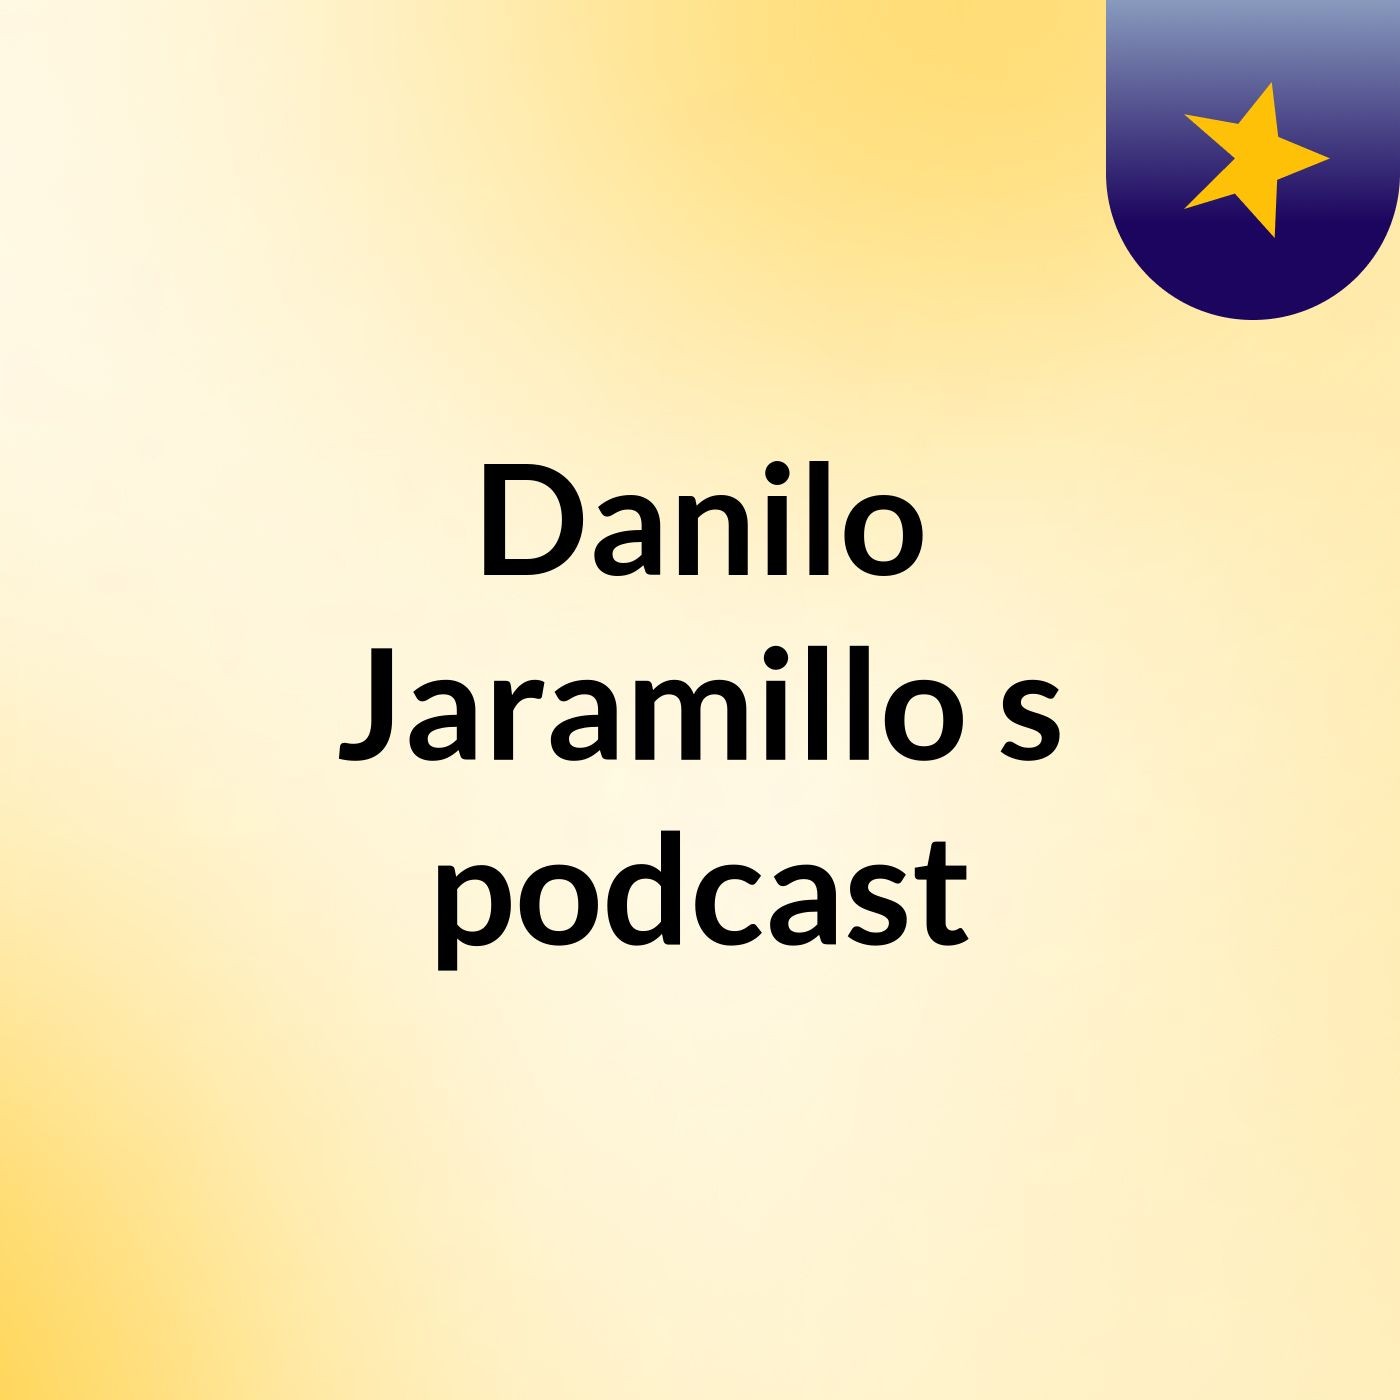 Danilo Jaramillo's podcast